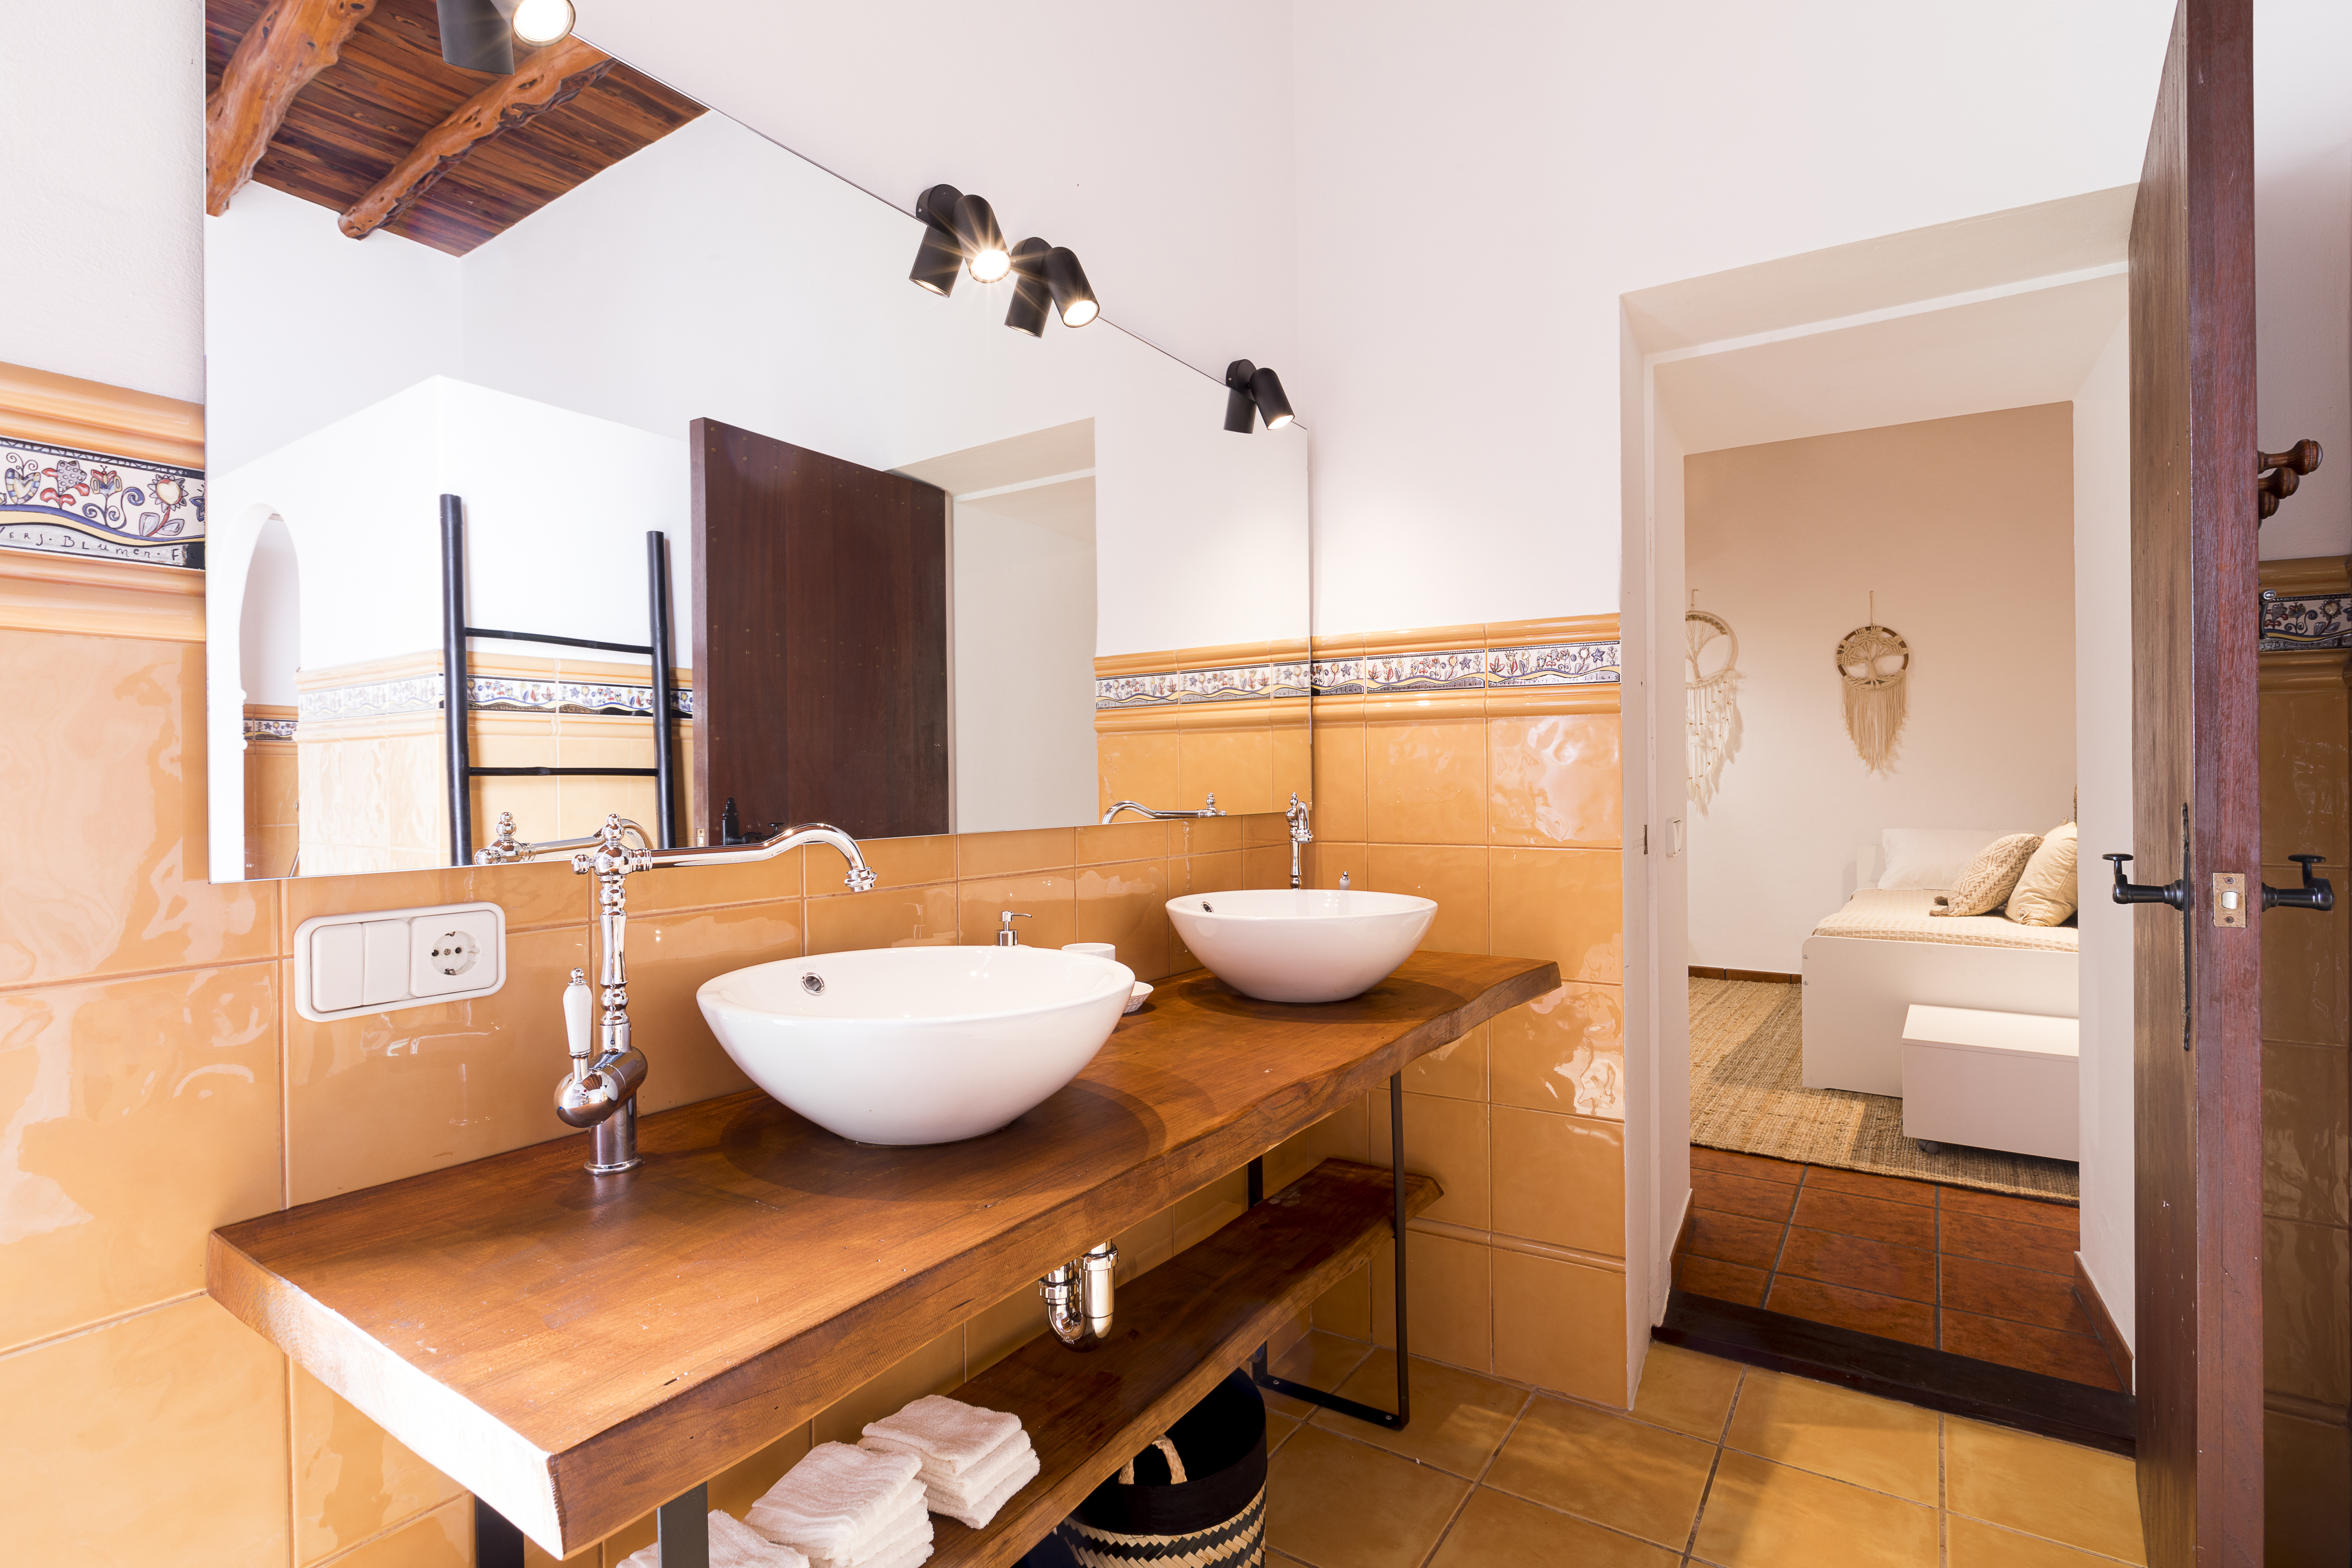 Resa estates rental in jesus 2022 finca private pool in Ibiza house bathroom sink.jpg